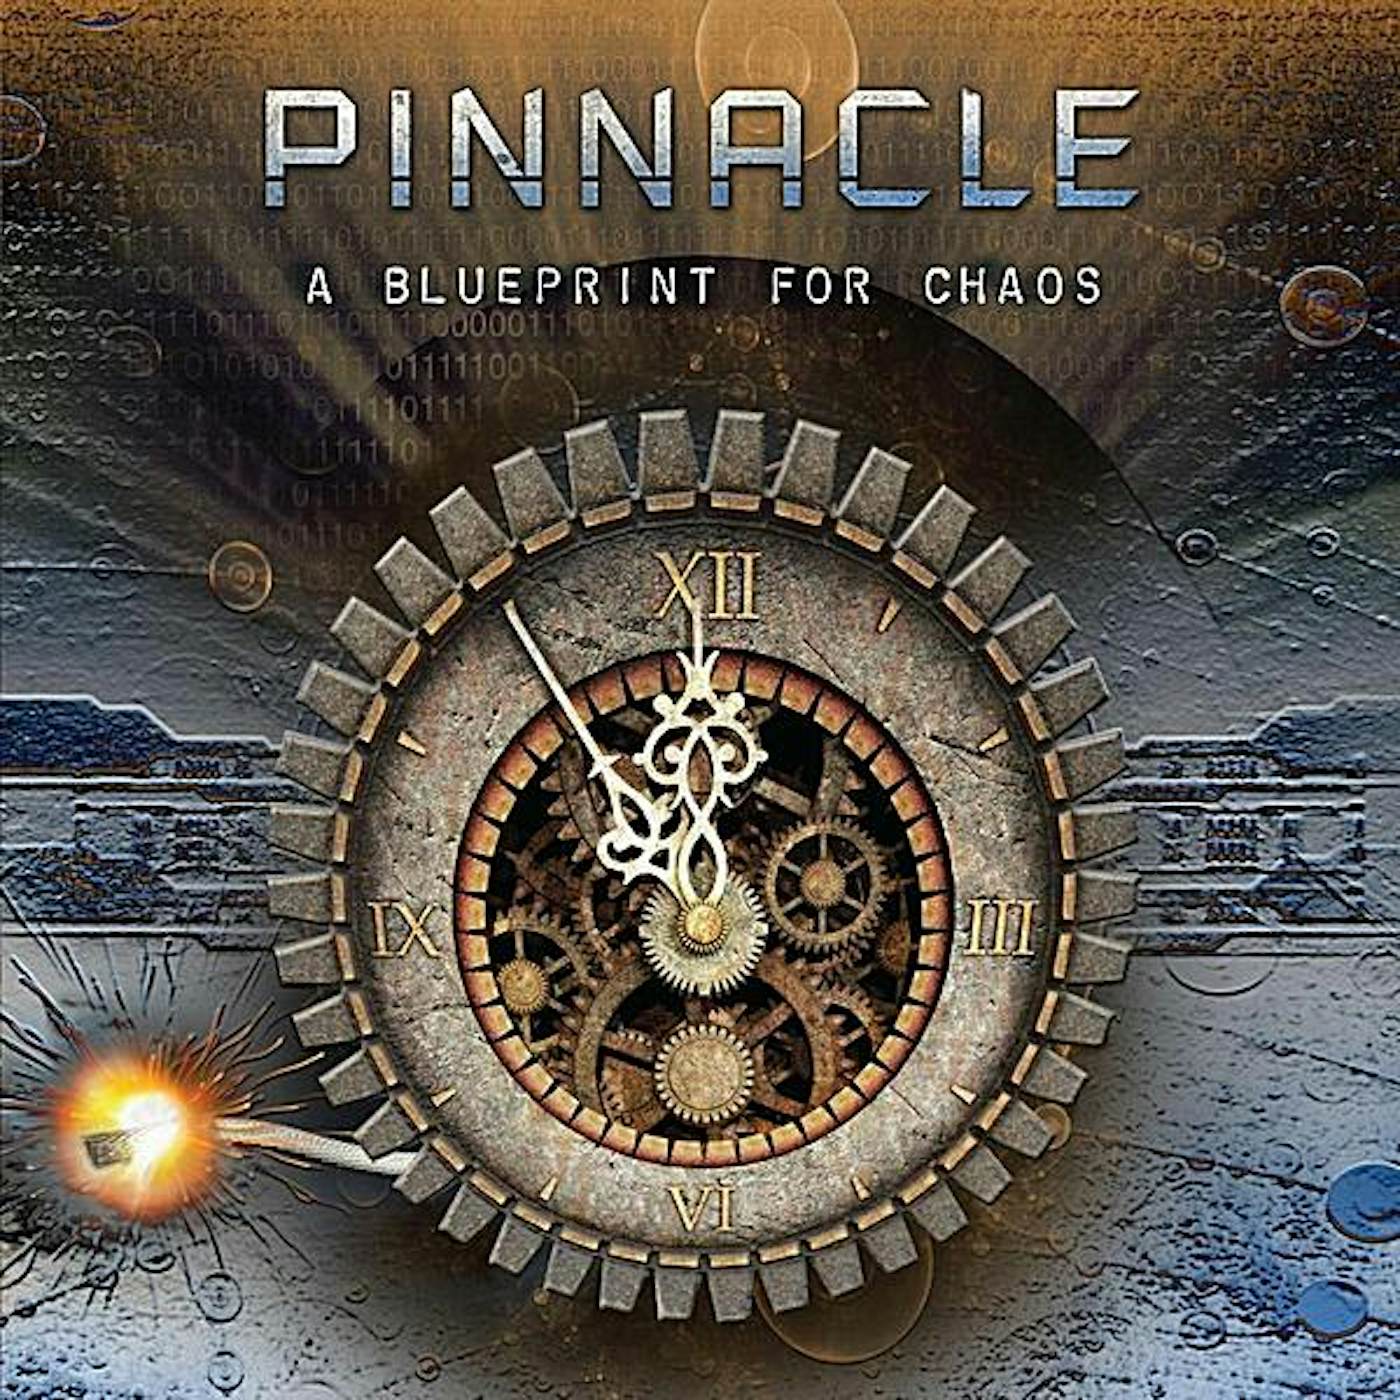 Pinnacle BLUEPRINT FOR CHAOS CD